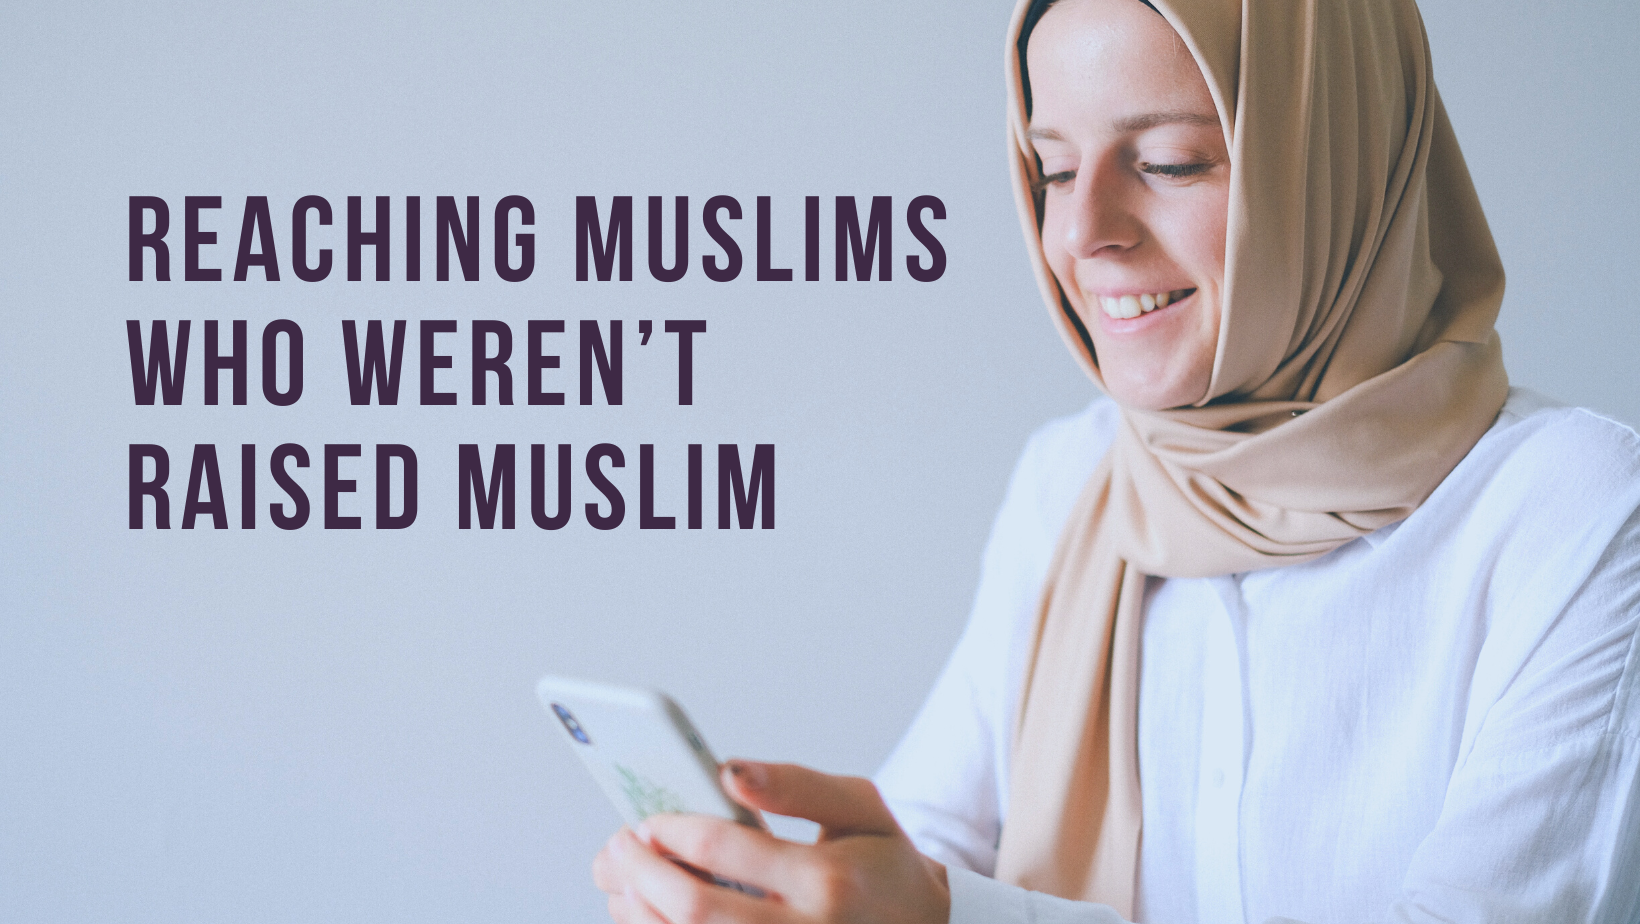 Reaching Muslims who weren't raised Muslim